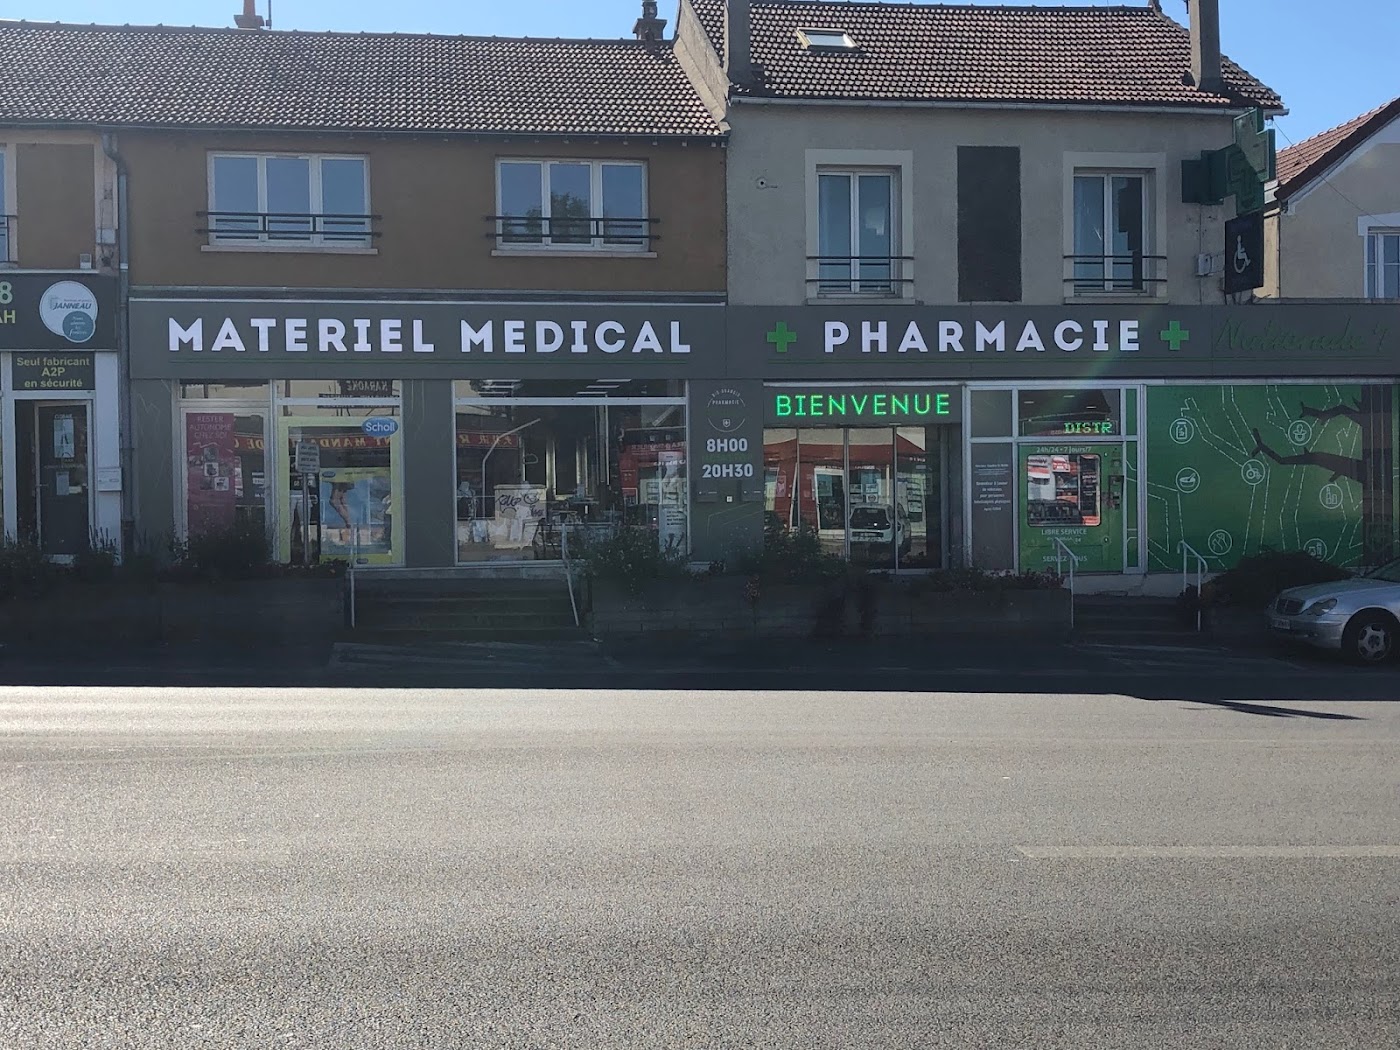 Pharmacie Nationale 7 El Bori